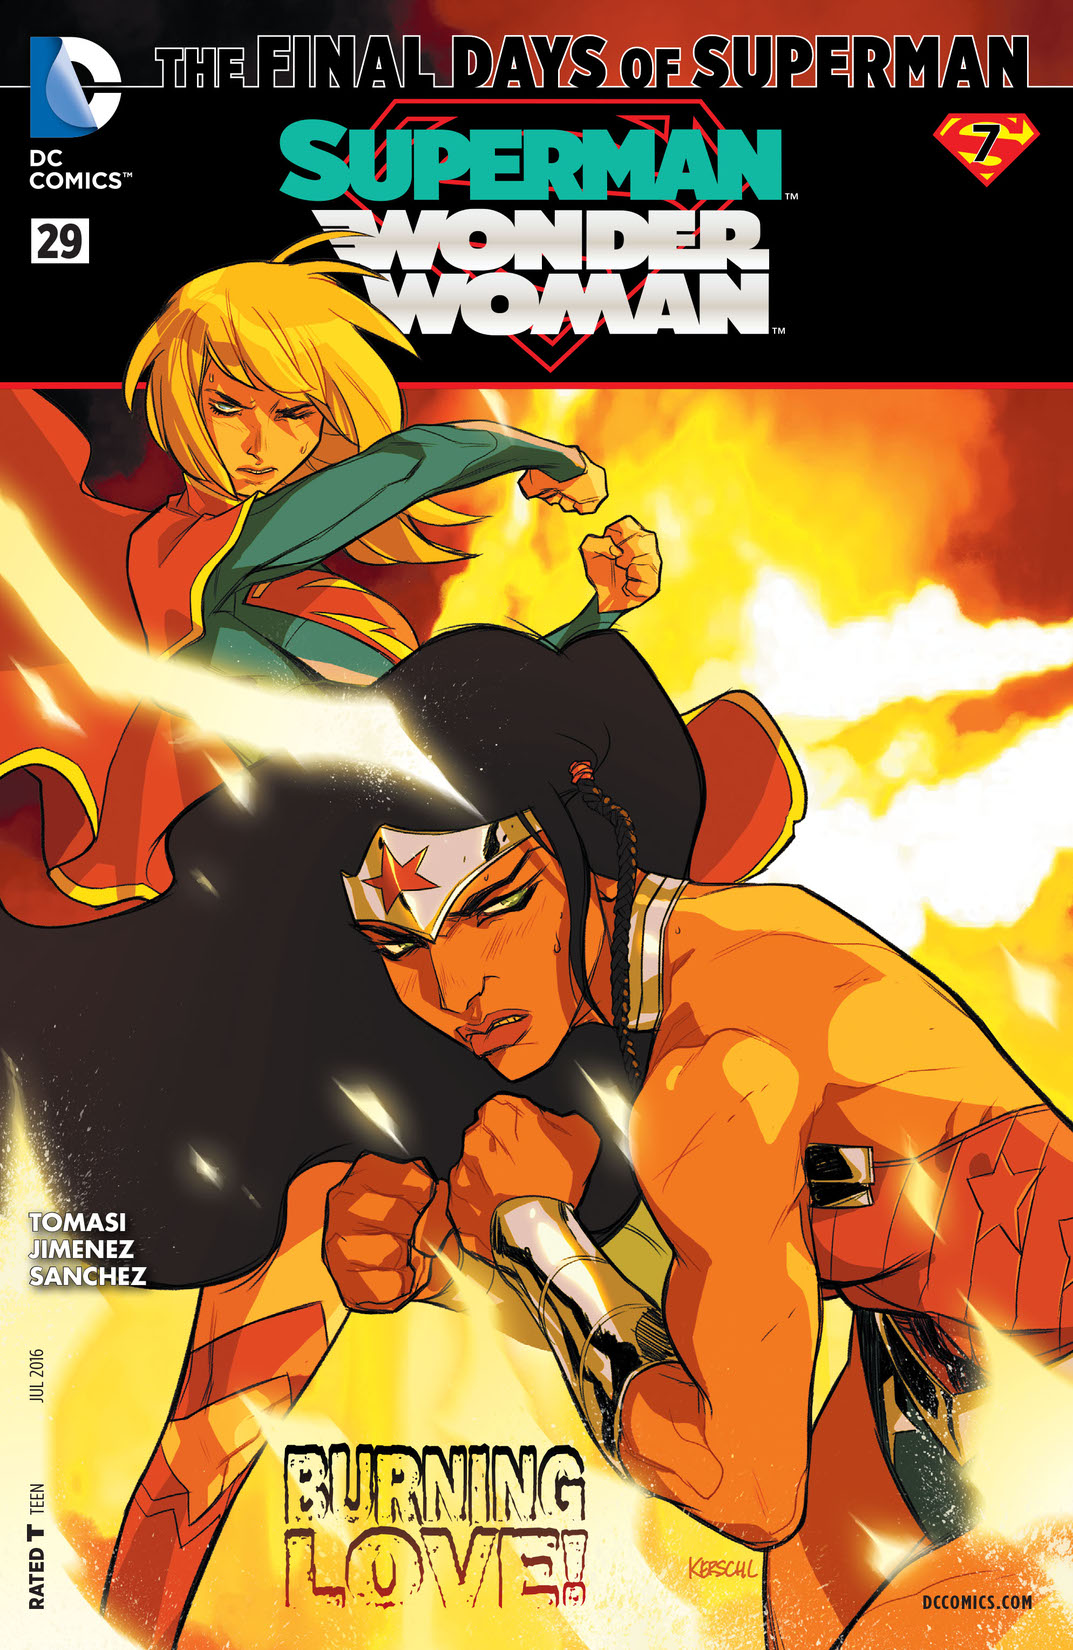 Superman/Wonder Woman #29 preview images